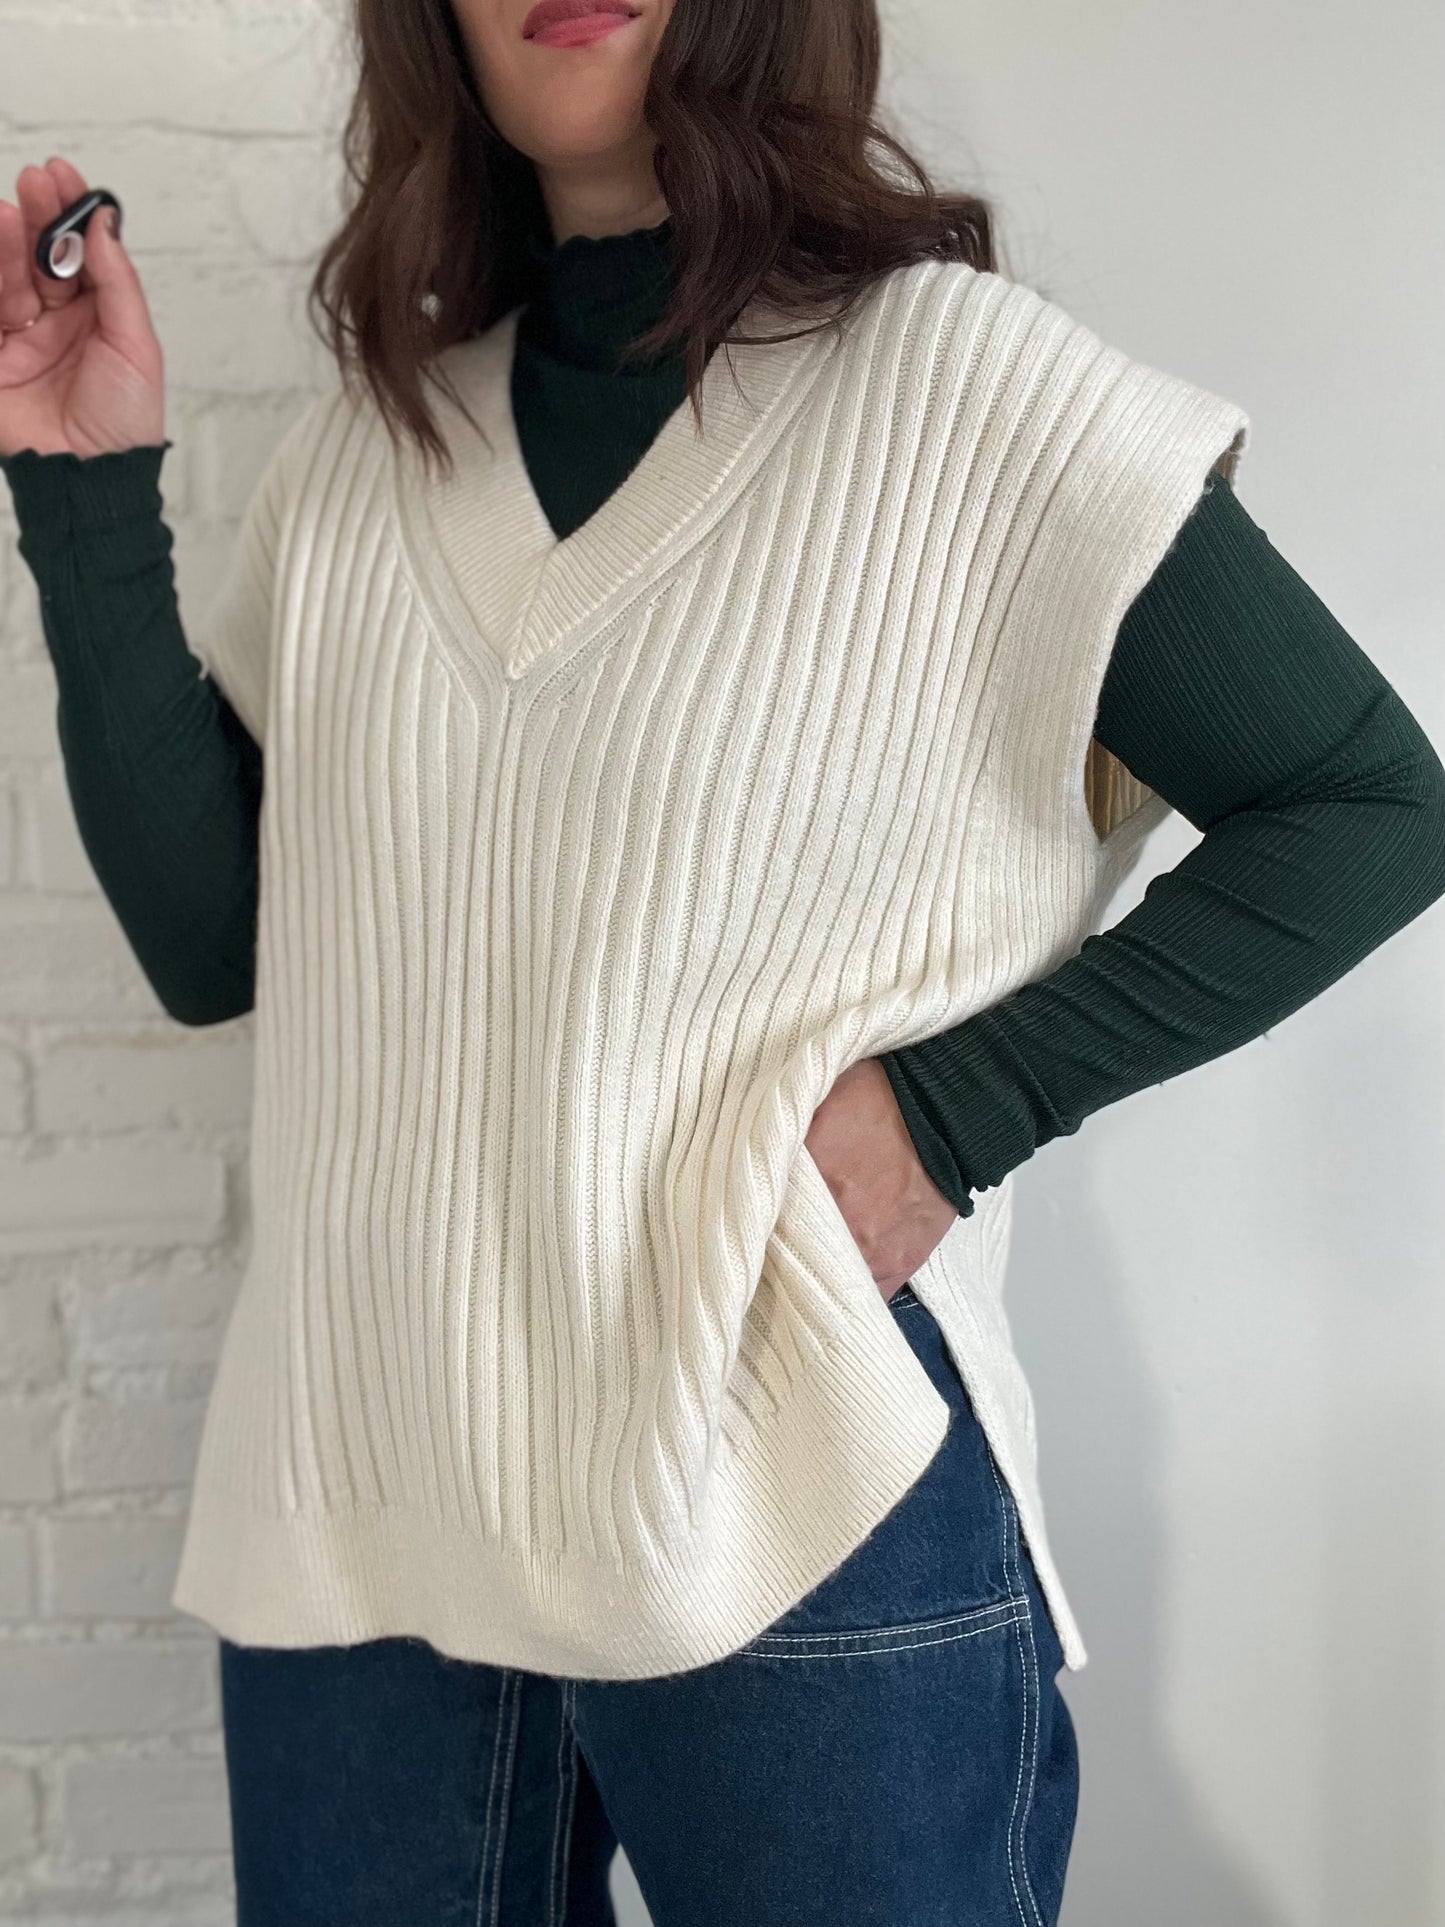 Rib-Knit Sweater Vest - Size M (Oversized)